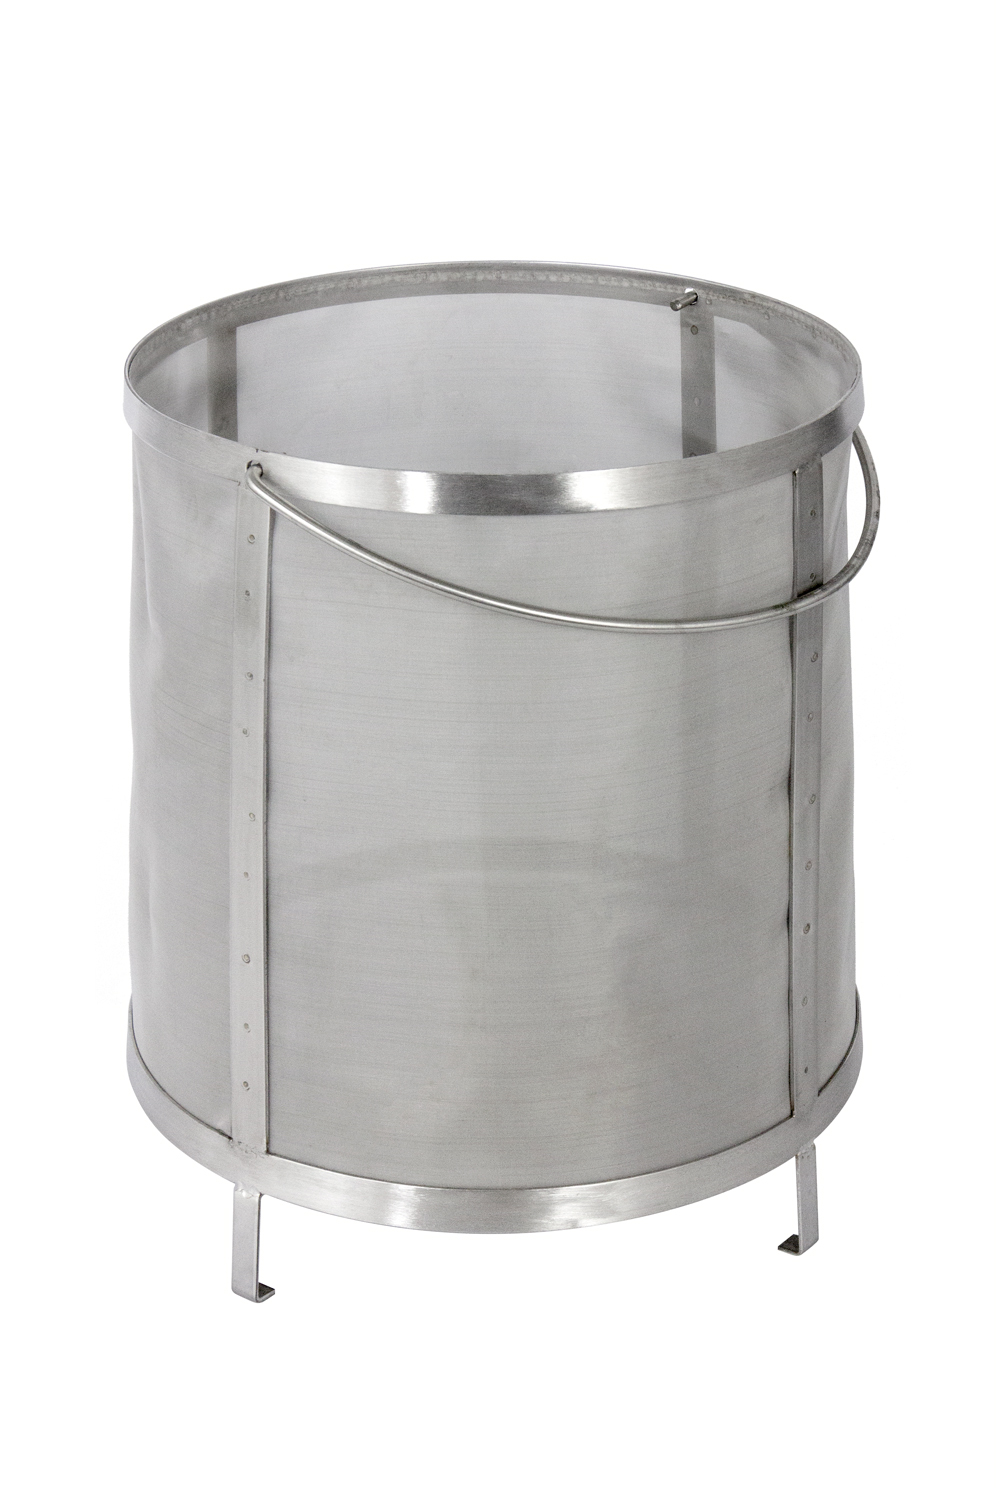 Stainless Steel Cold Brew Coffee Maker Tea Infuser Basket Strainer Mesh Filter